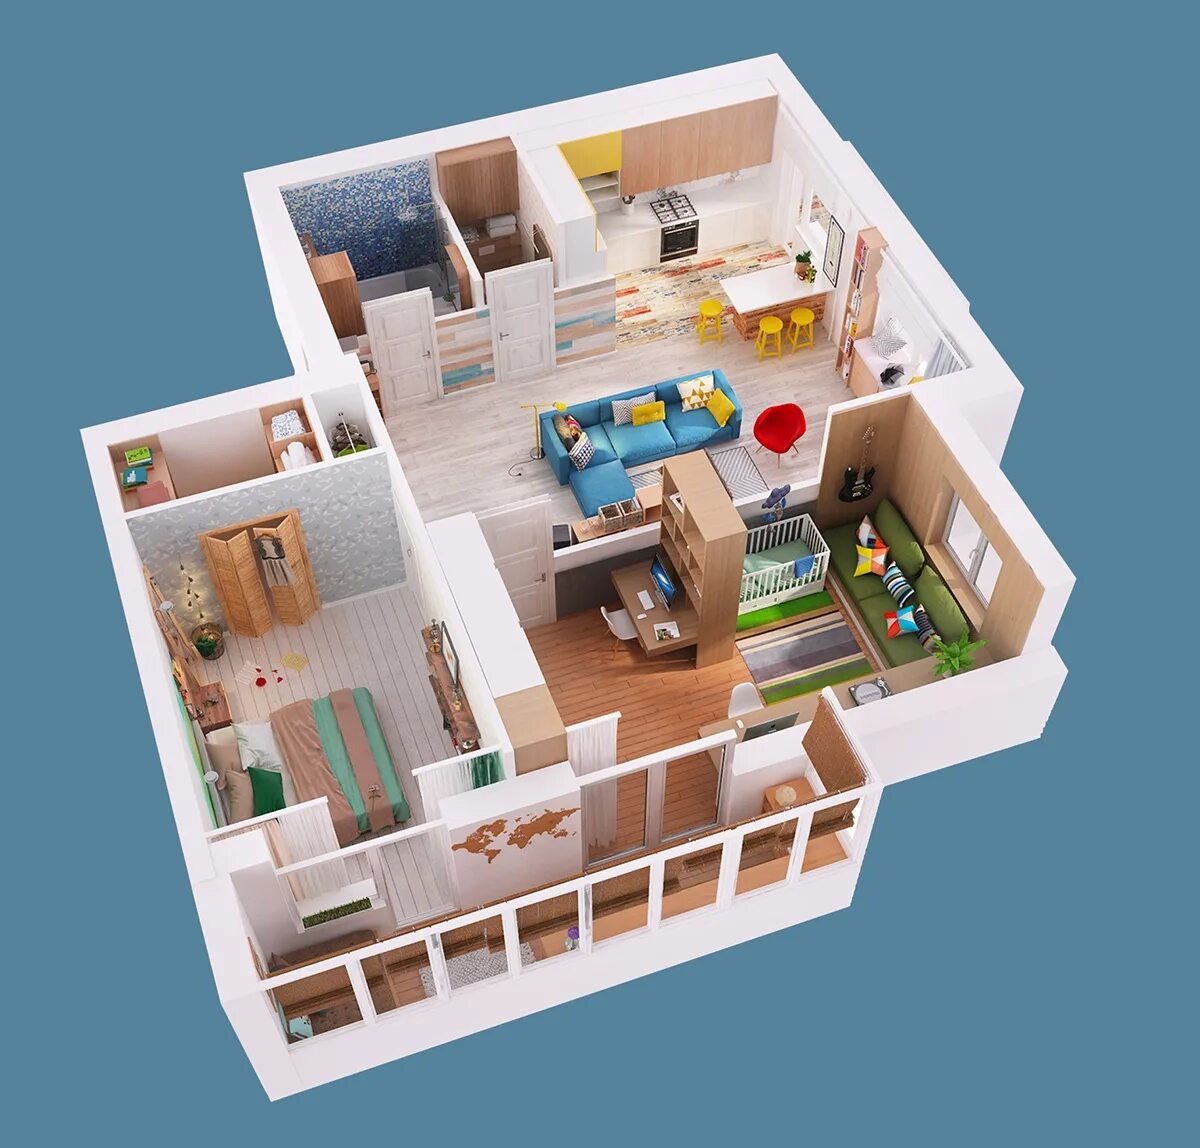 Дом на три комнаты. Модель квартиры. Планировки домов. Планировка квартиры. Макет квартиры.